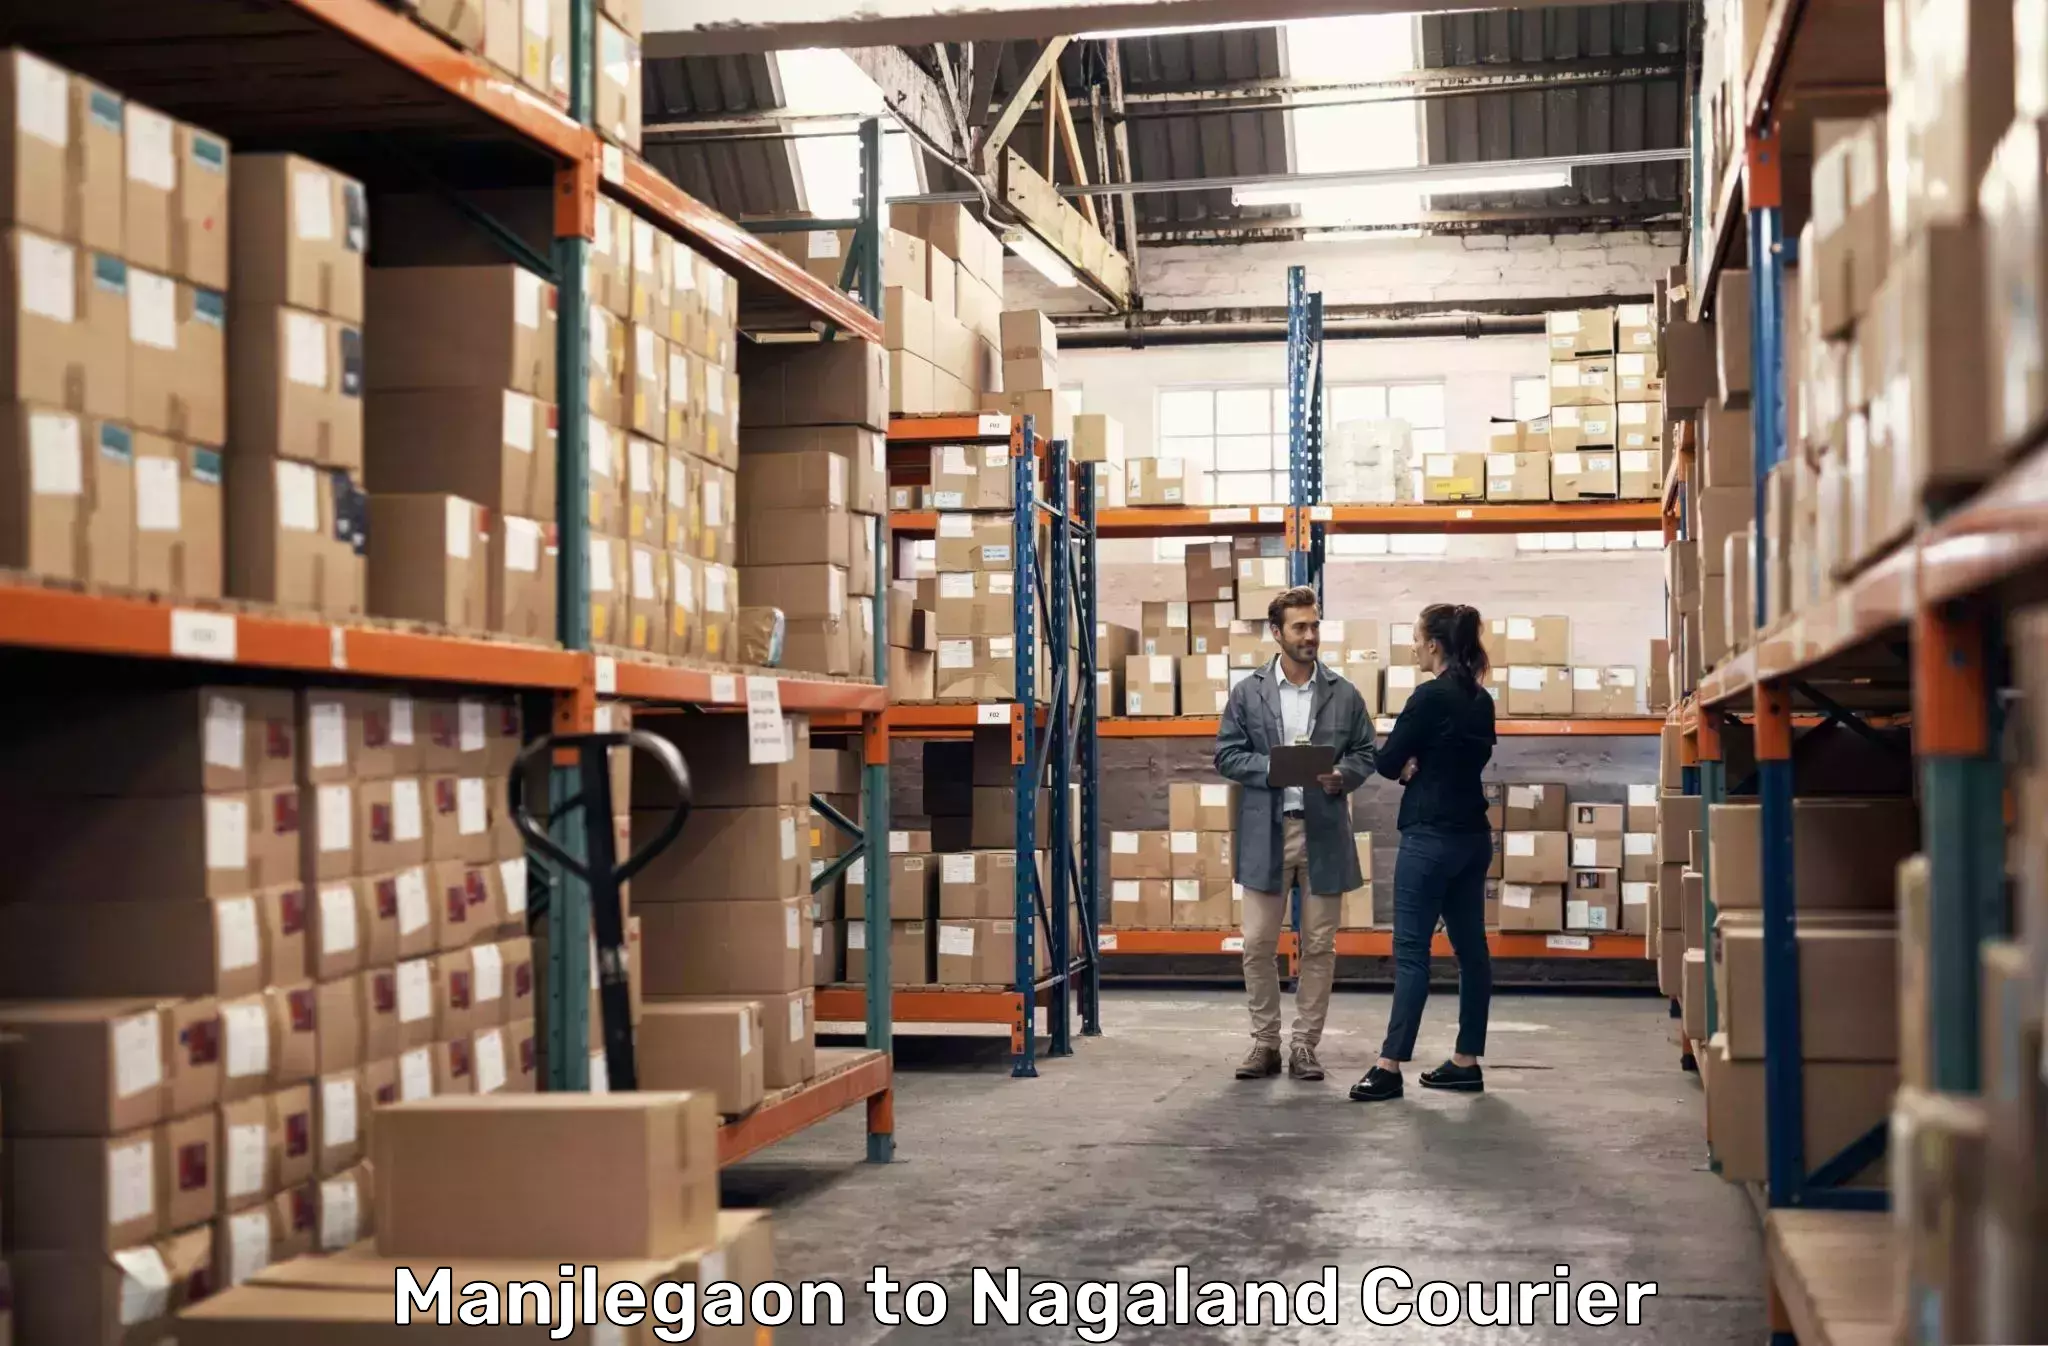 International logistics Manjlegaon to Nagaland